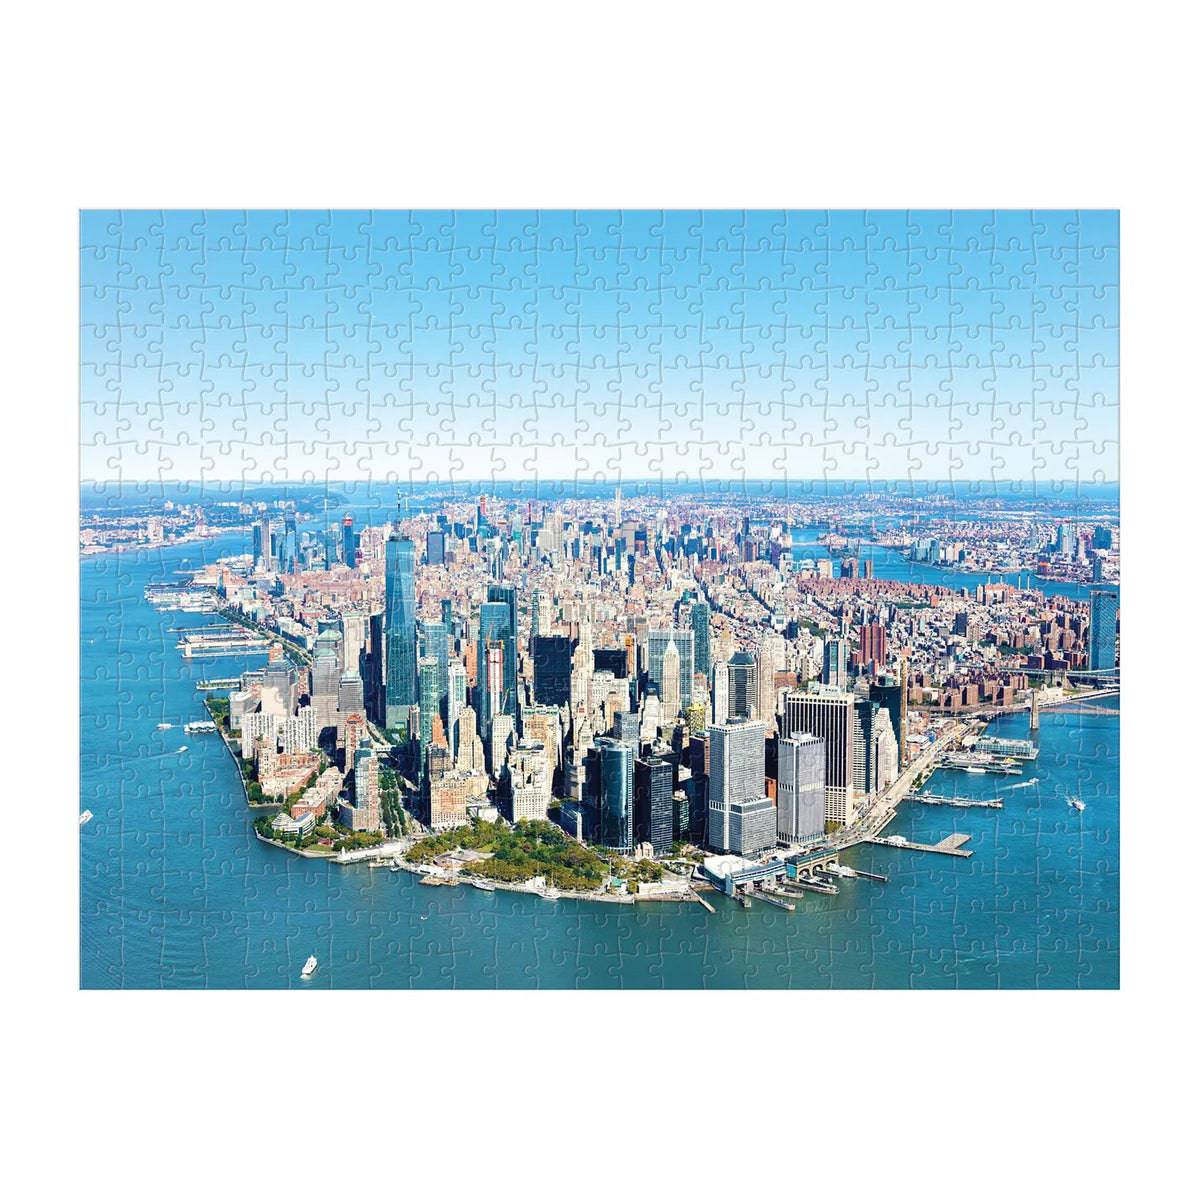 Gray Malin New York City Double-Sided 500 Piece Jigsaw Puzzle - The Preppy Bunny